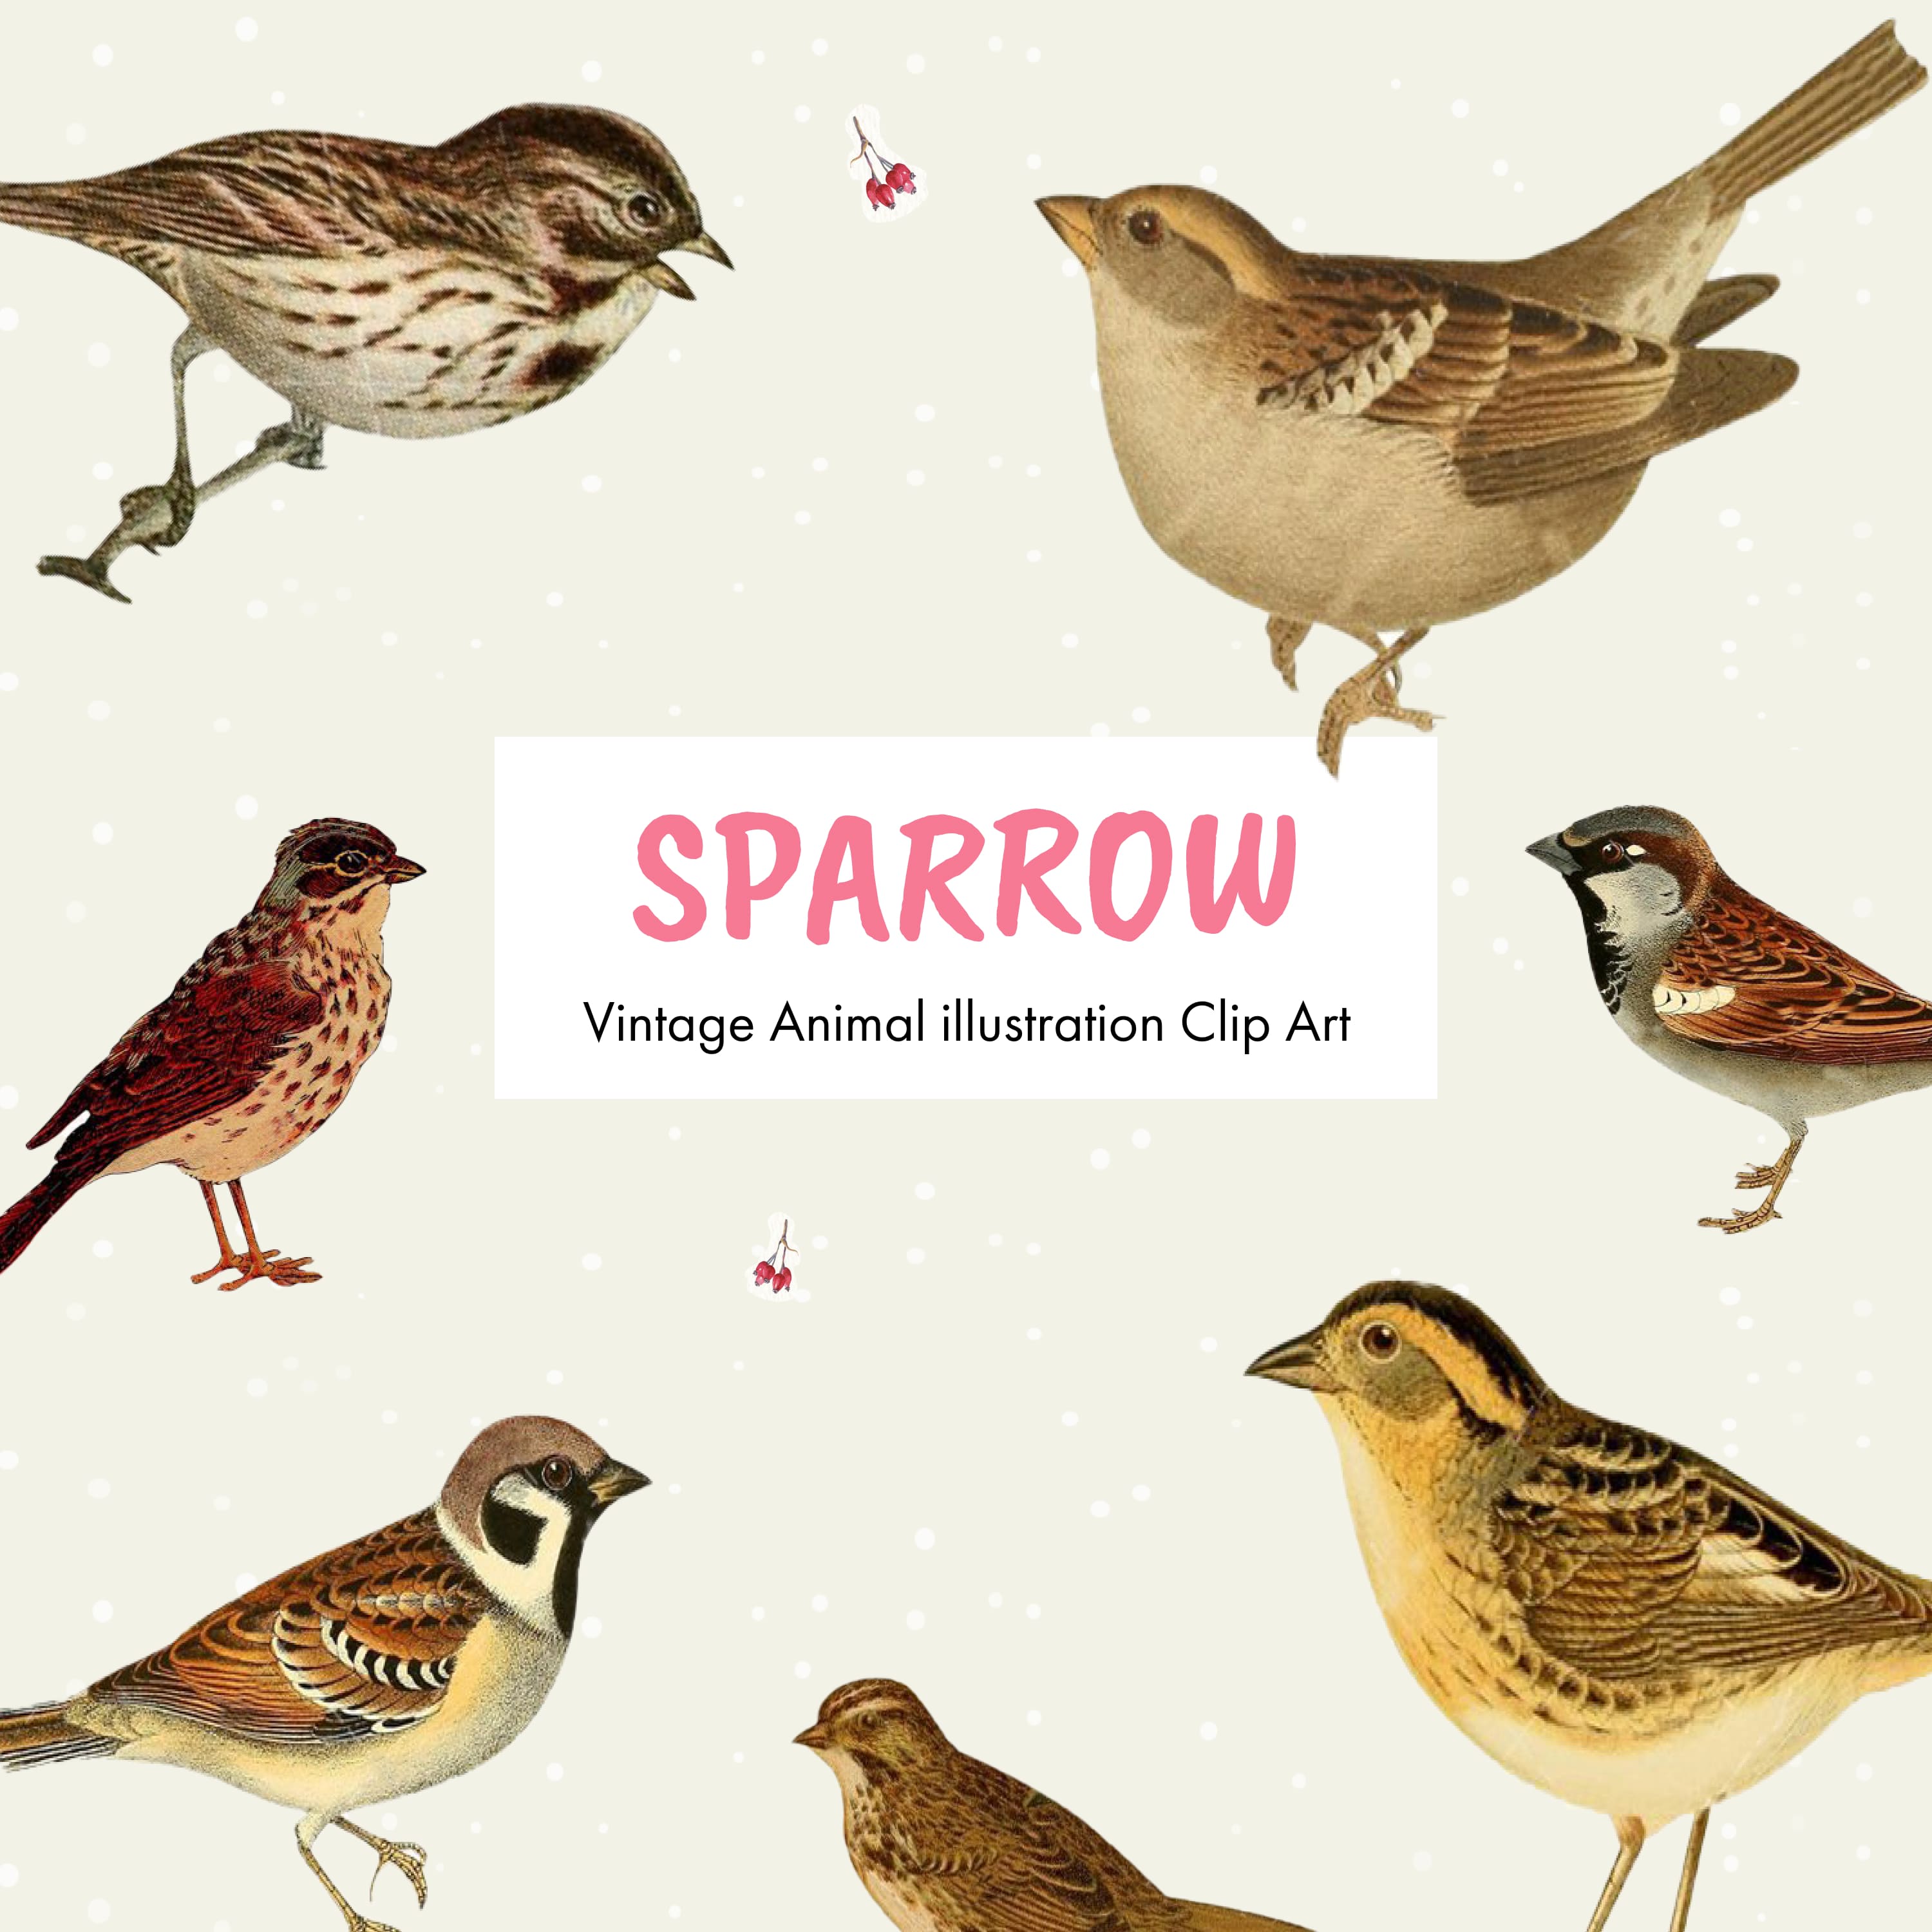 Sparrow vintage animal illustration clip art - main image preview.